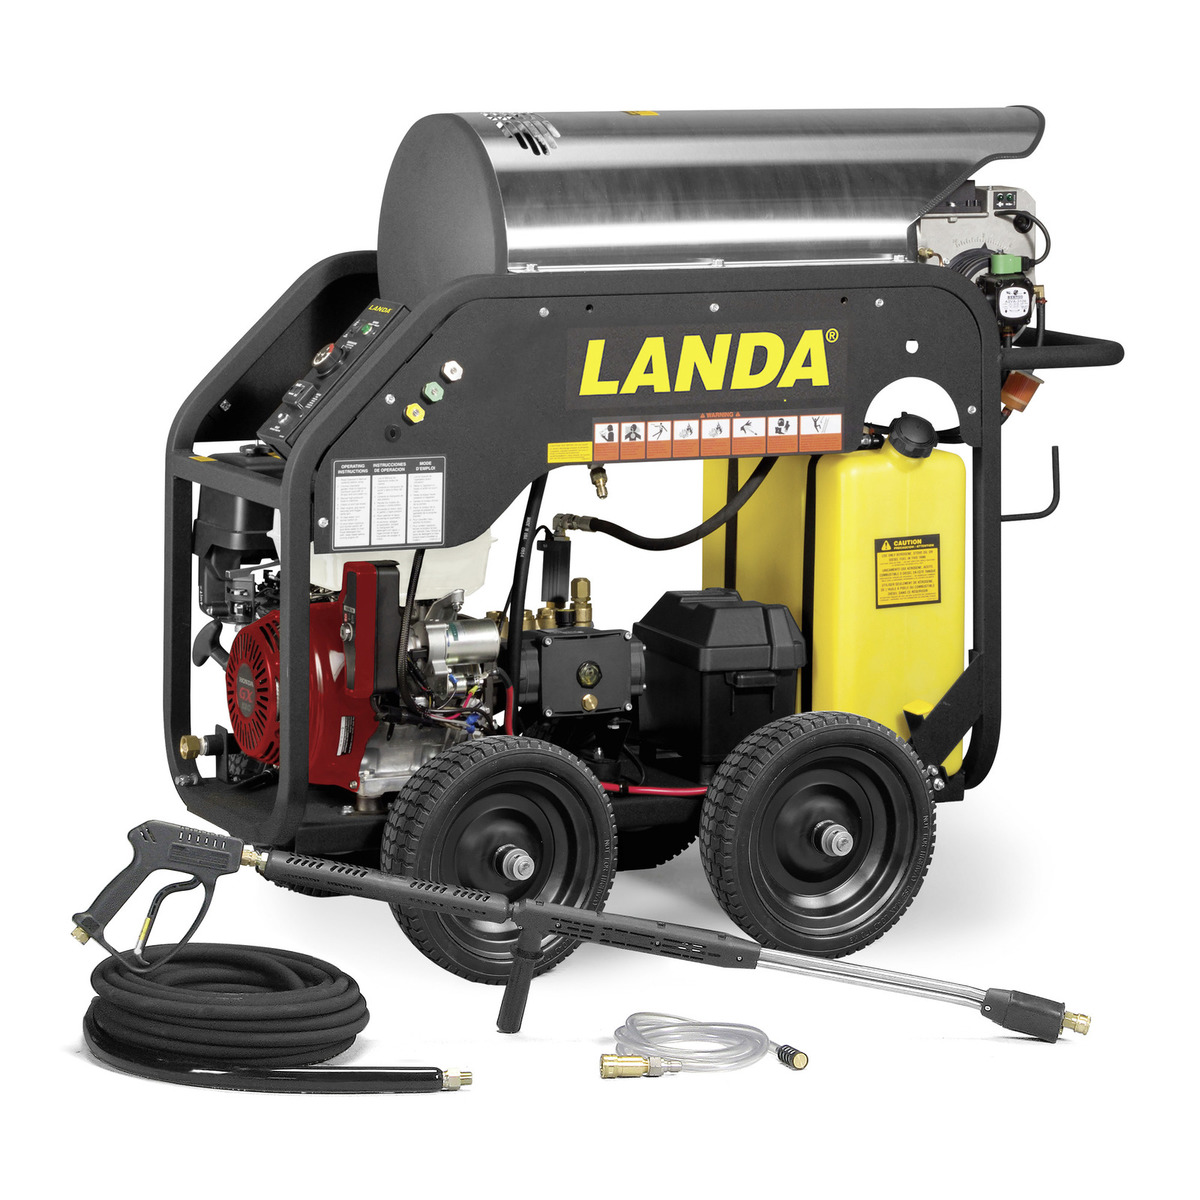 MHC Landa Gas Powered Pressure Washer